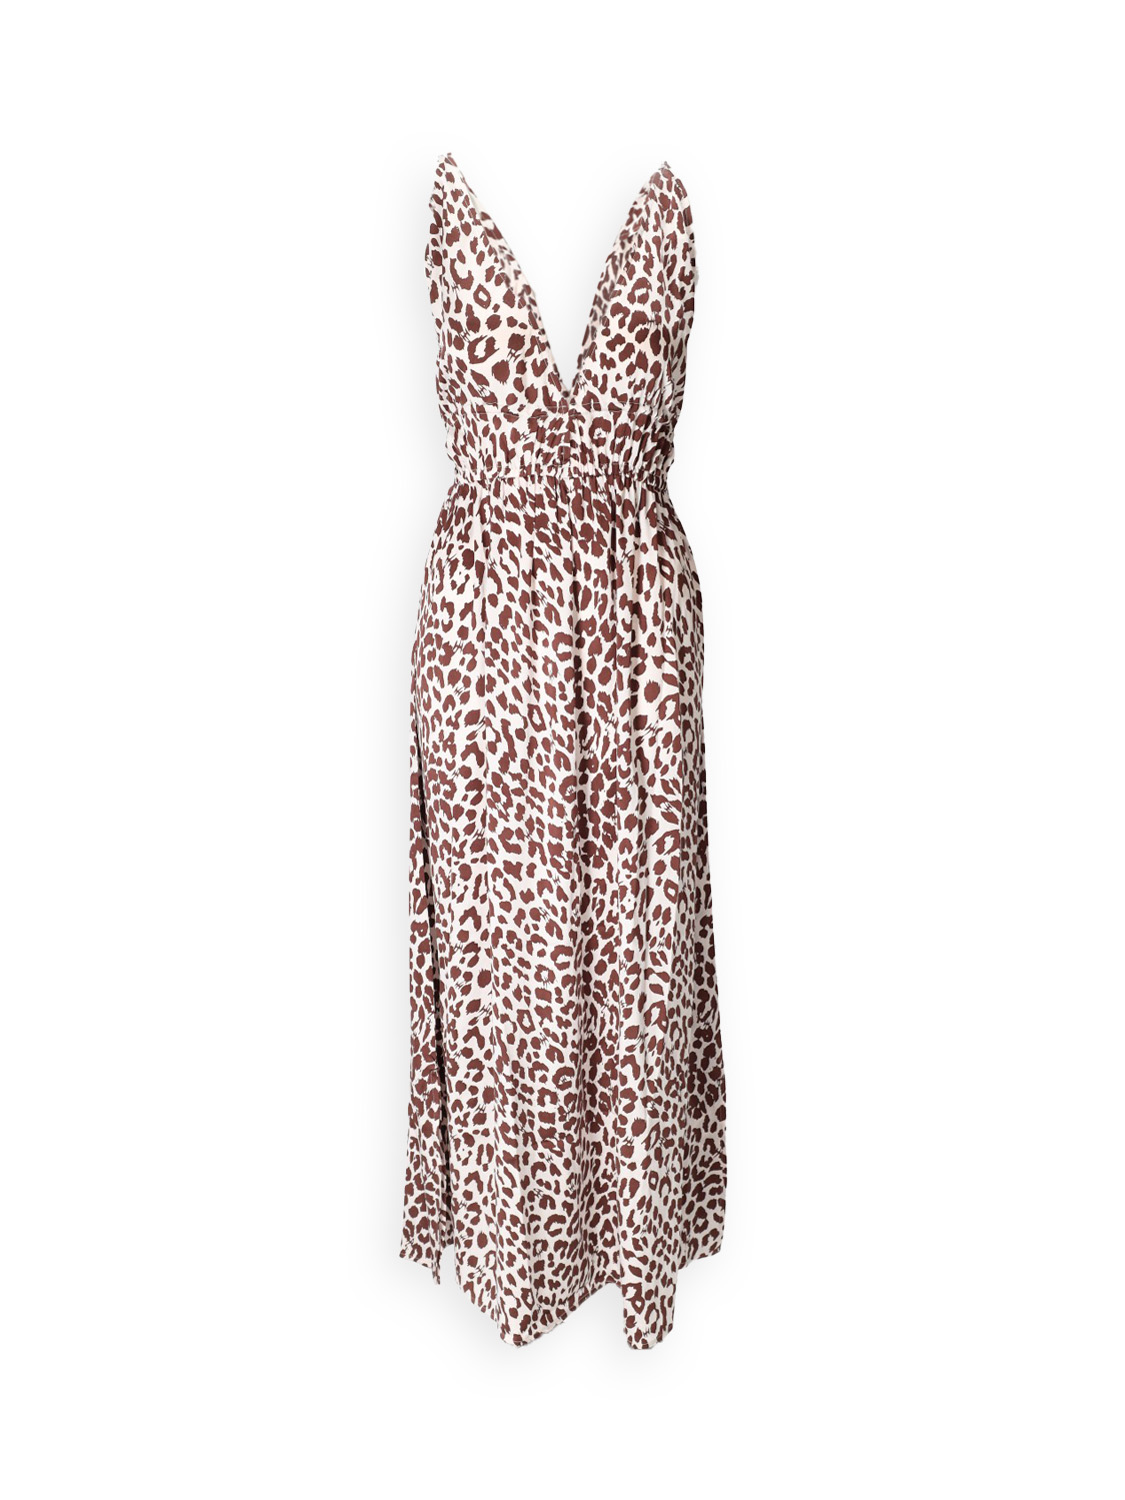 Prontah Cheetah - Silk midi dress with leopard print 